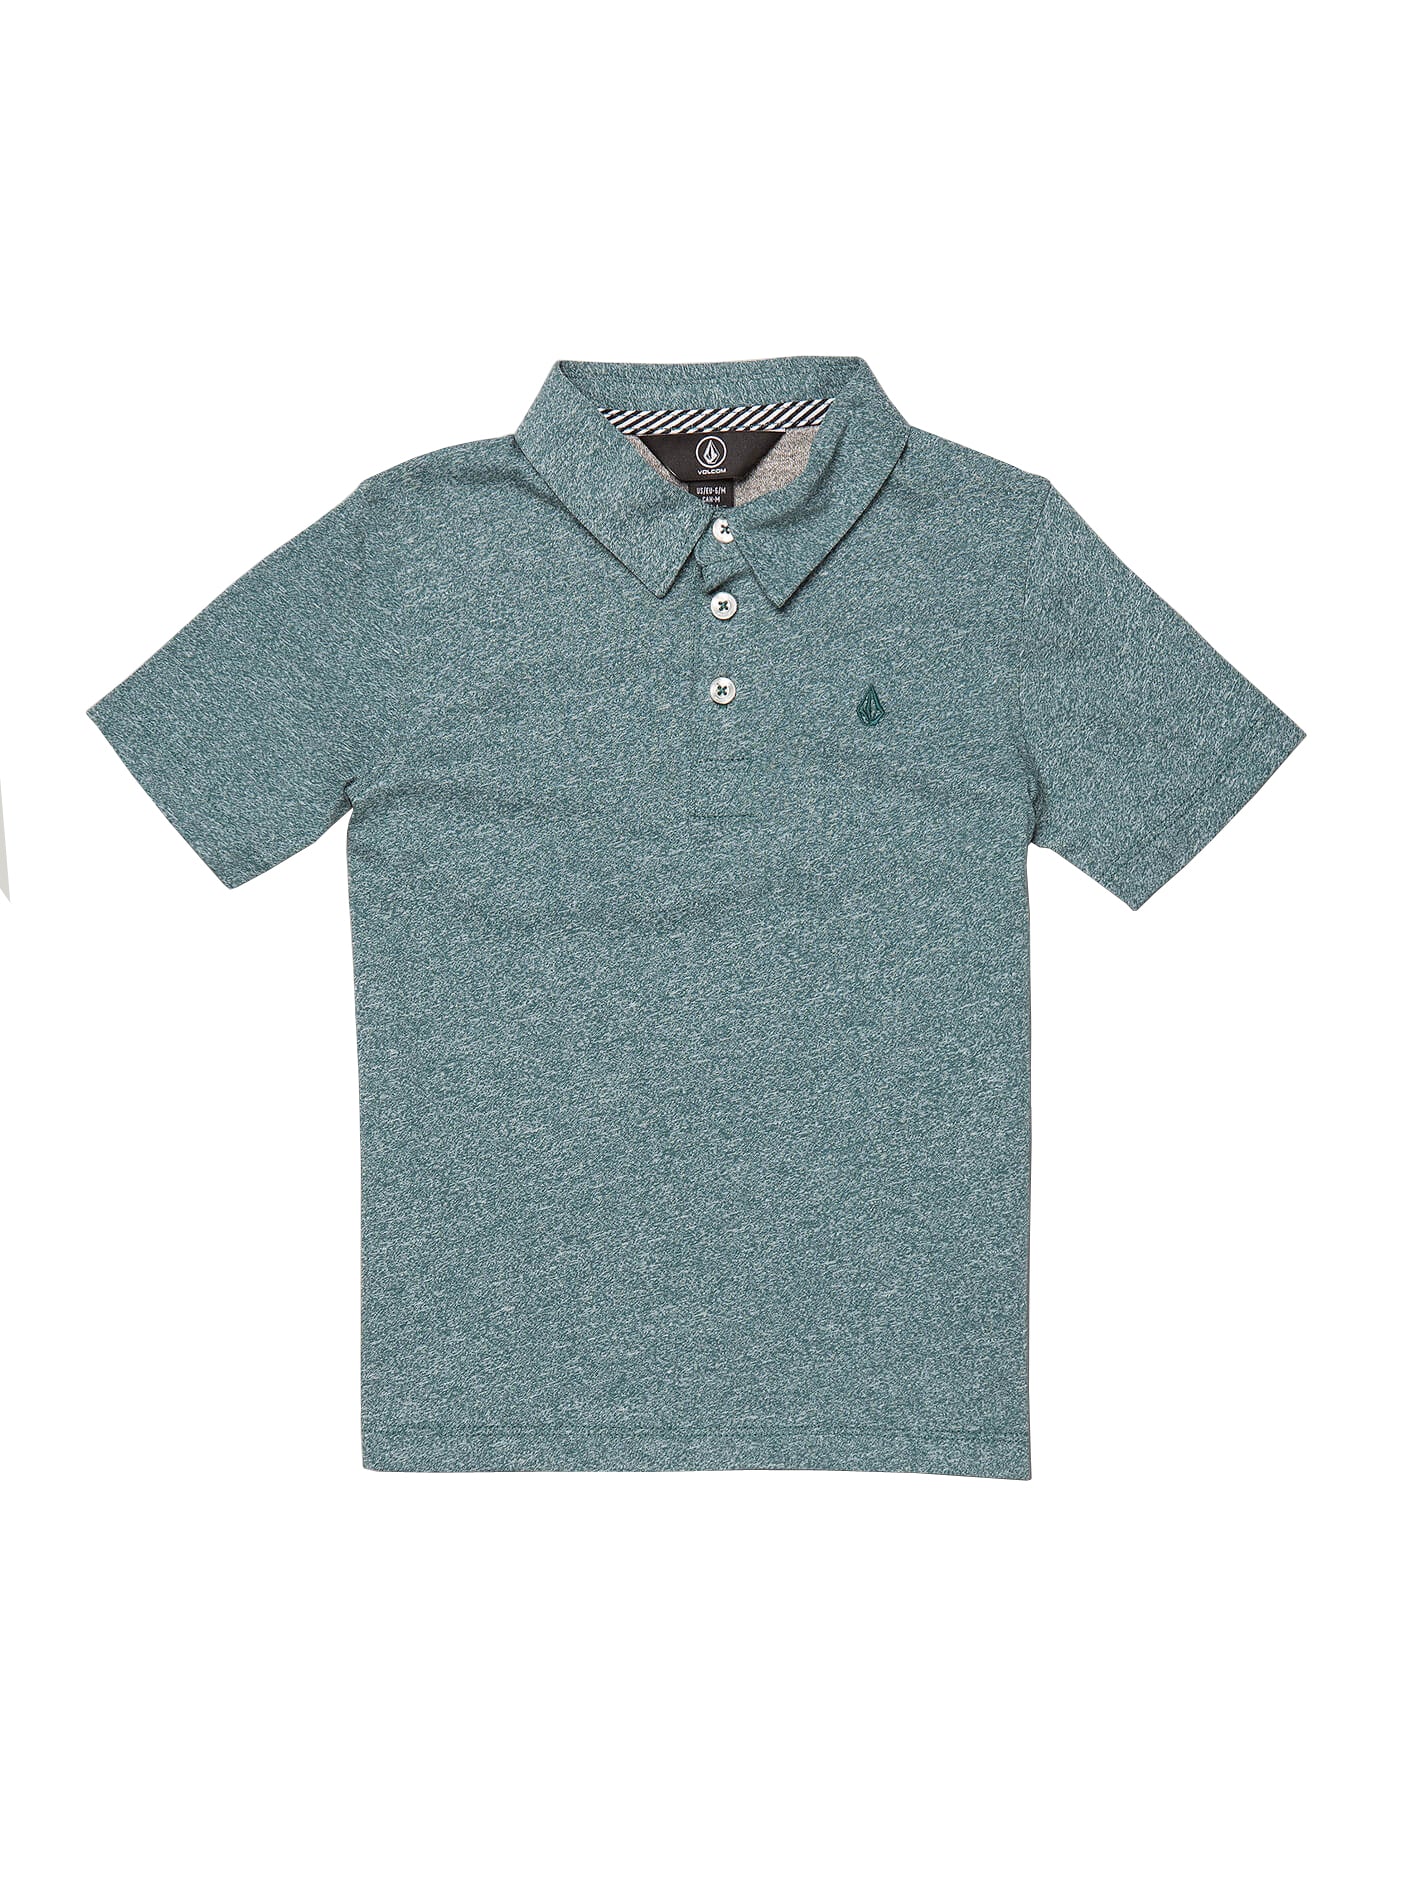 Volcom Wowzer Short Sleeve Kids Polo Shirt HYD 4T